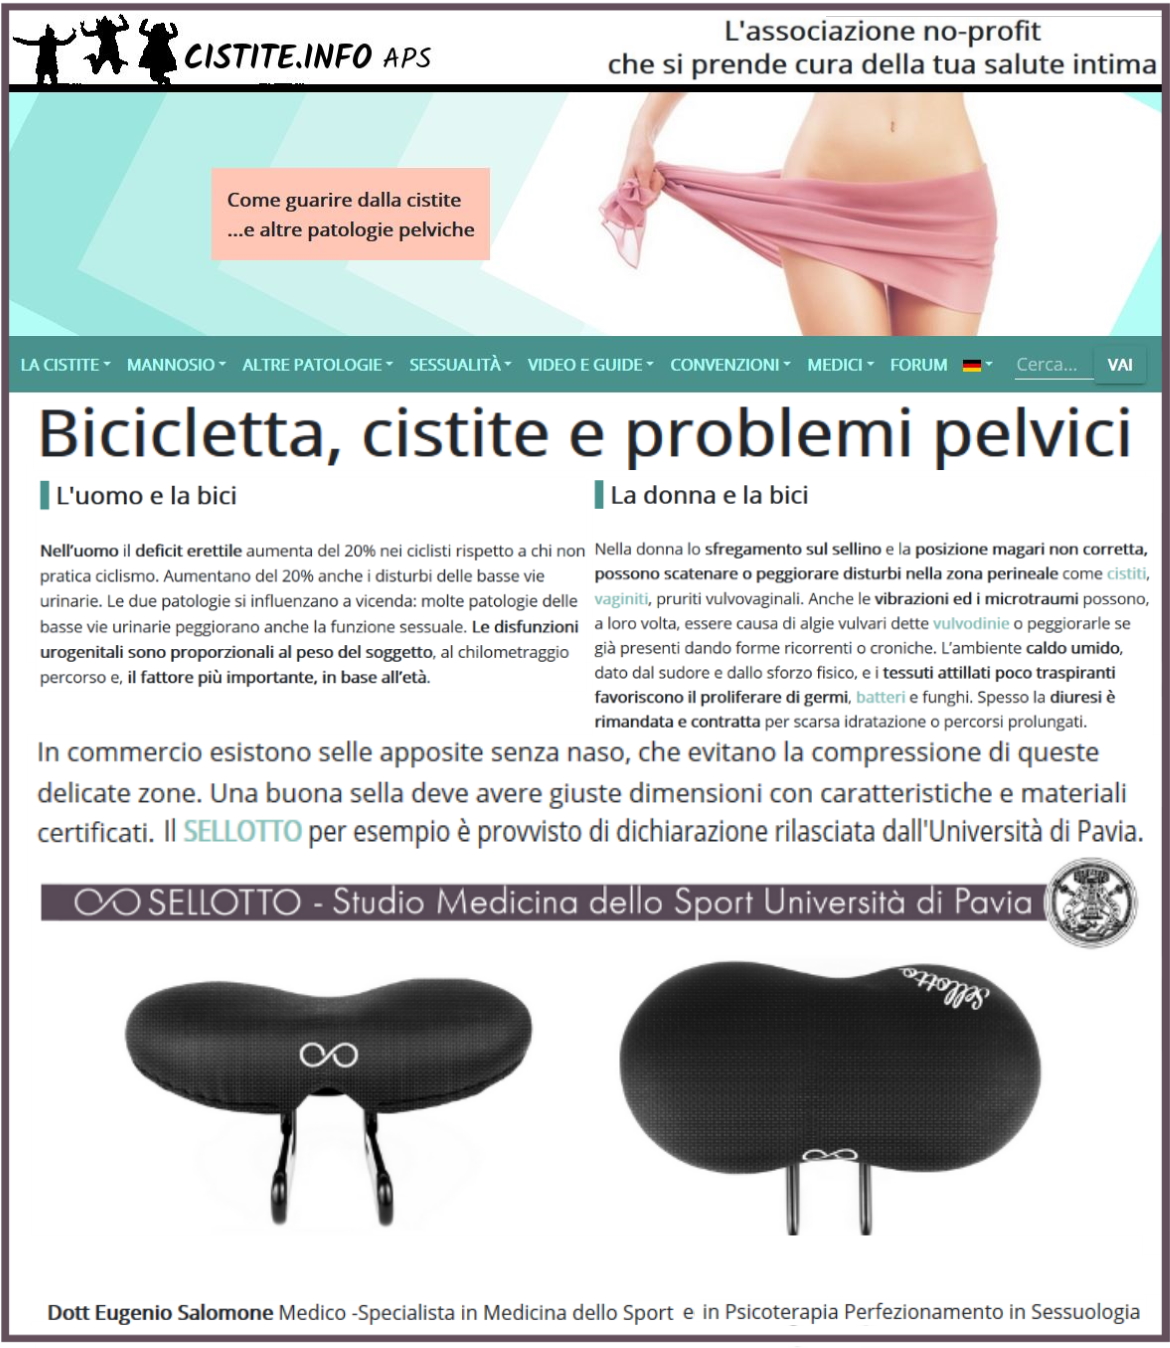 bicycle saddle cyclist intimate health pelvic diseases pressure genital area